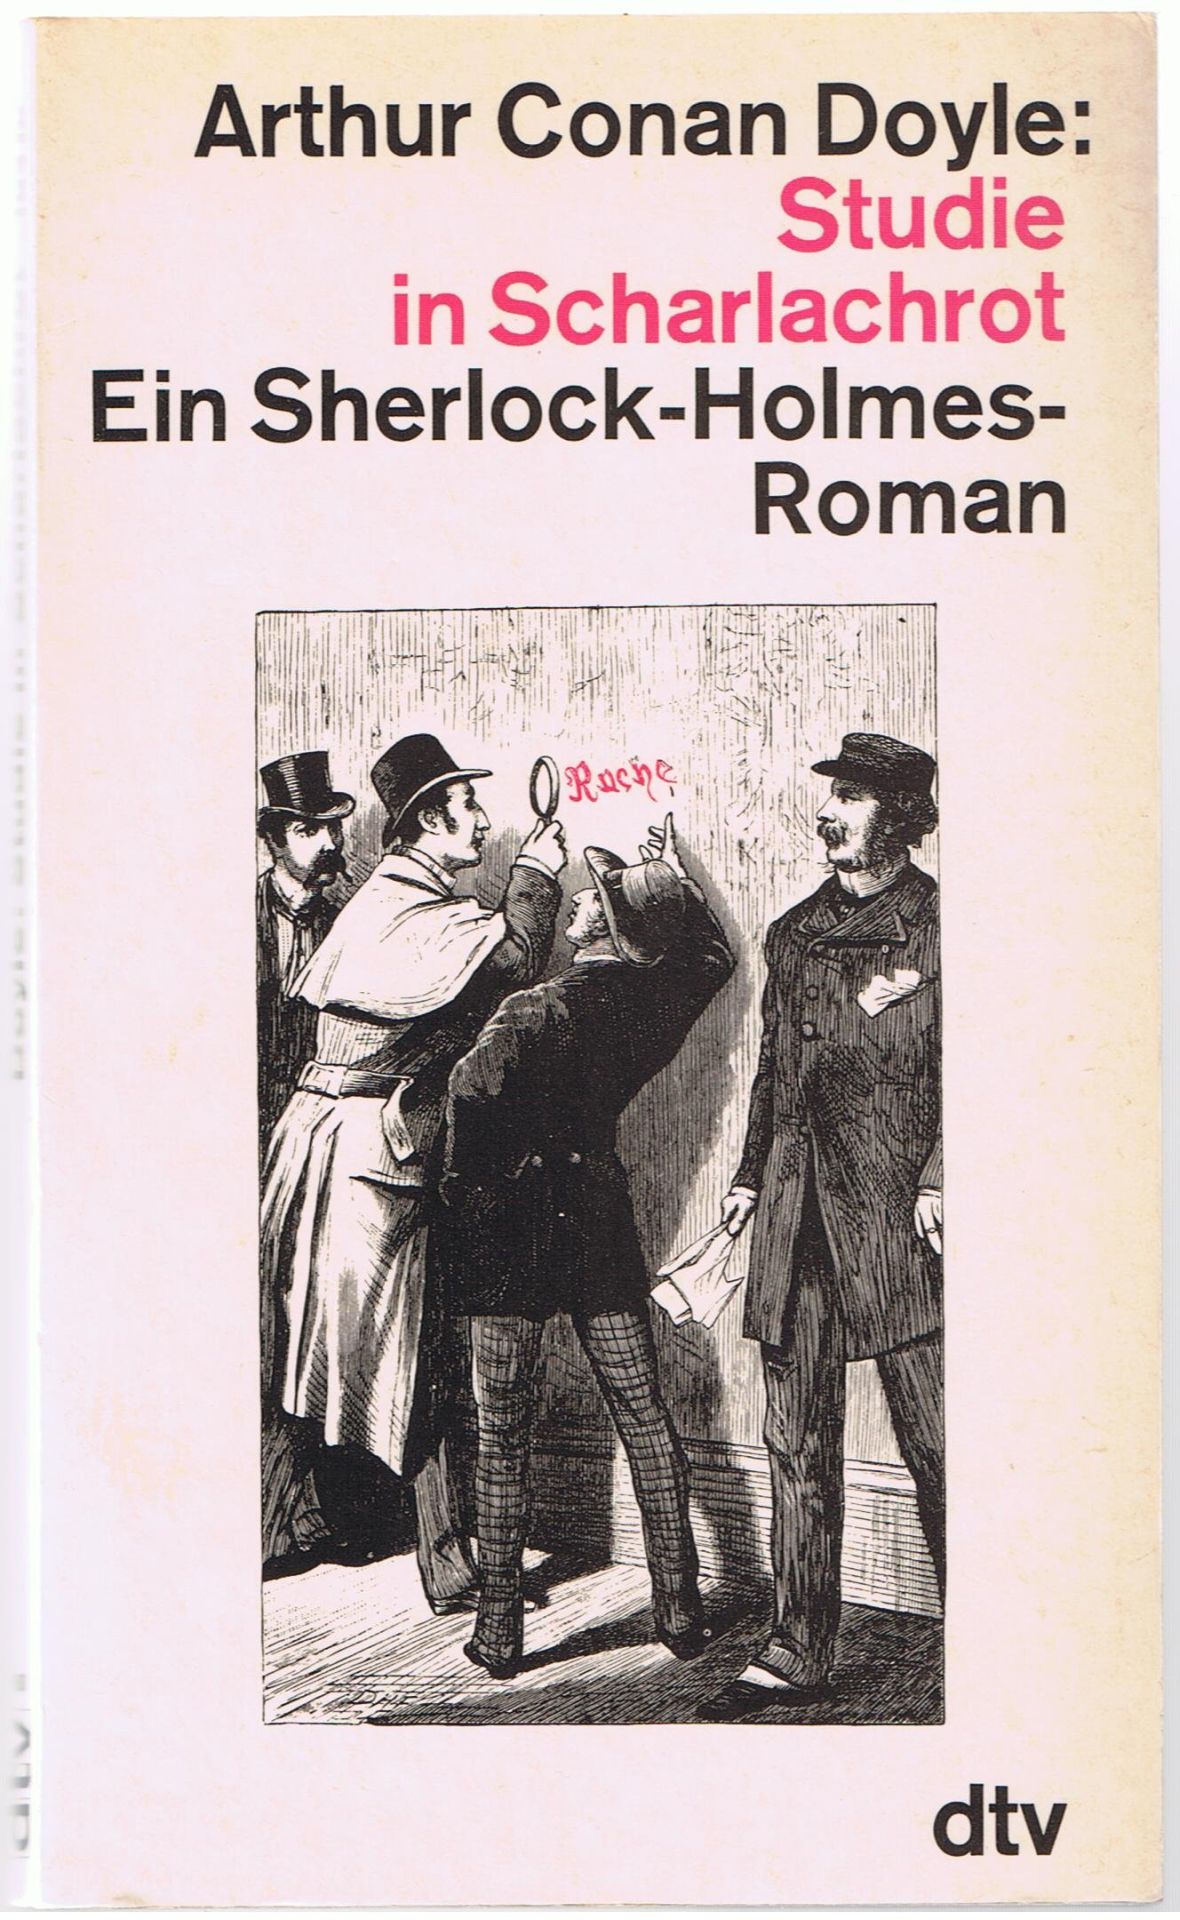 Studie in Scharlachrot e. Sherlock-Holmes-Roman - Arthur Conan Doyle